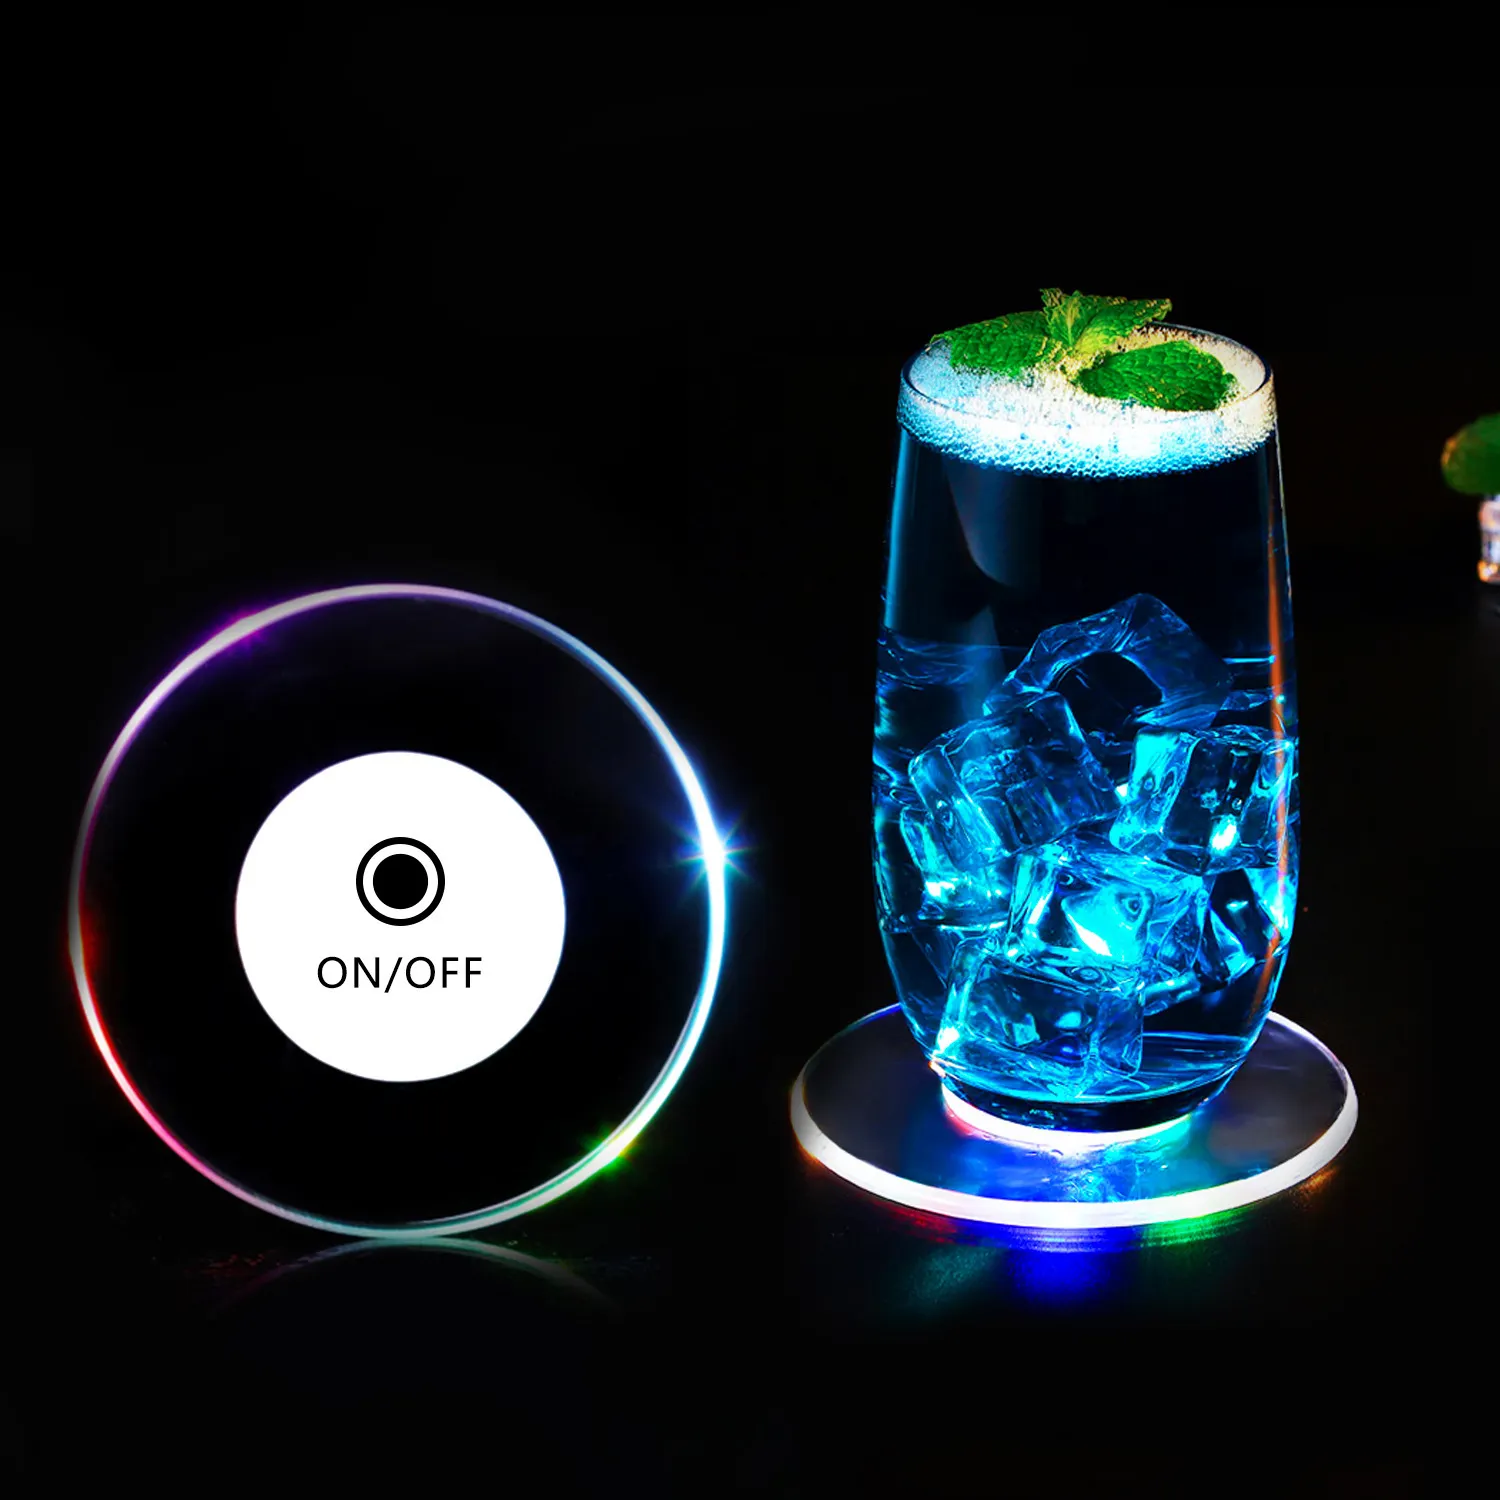 Zji montanha de led para garrafa, coasters iluminados com luz rgb colorida, garrafa glorificadora, adesivo de led, discos